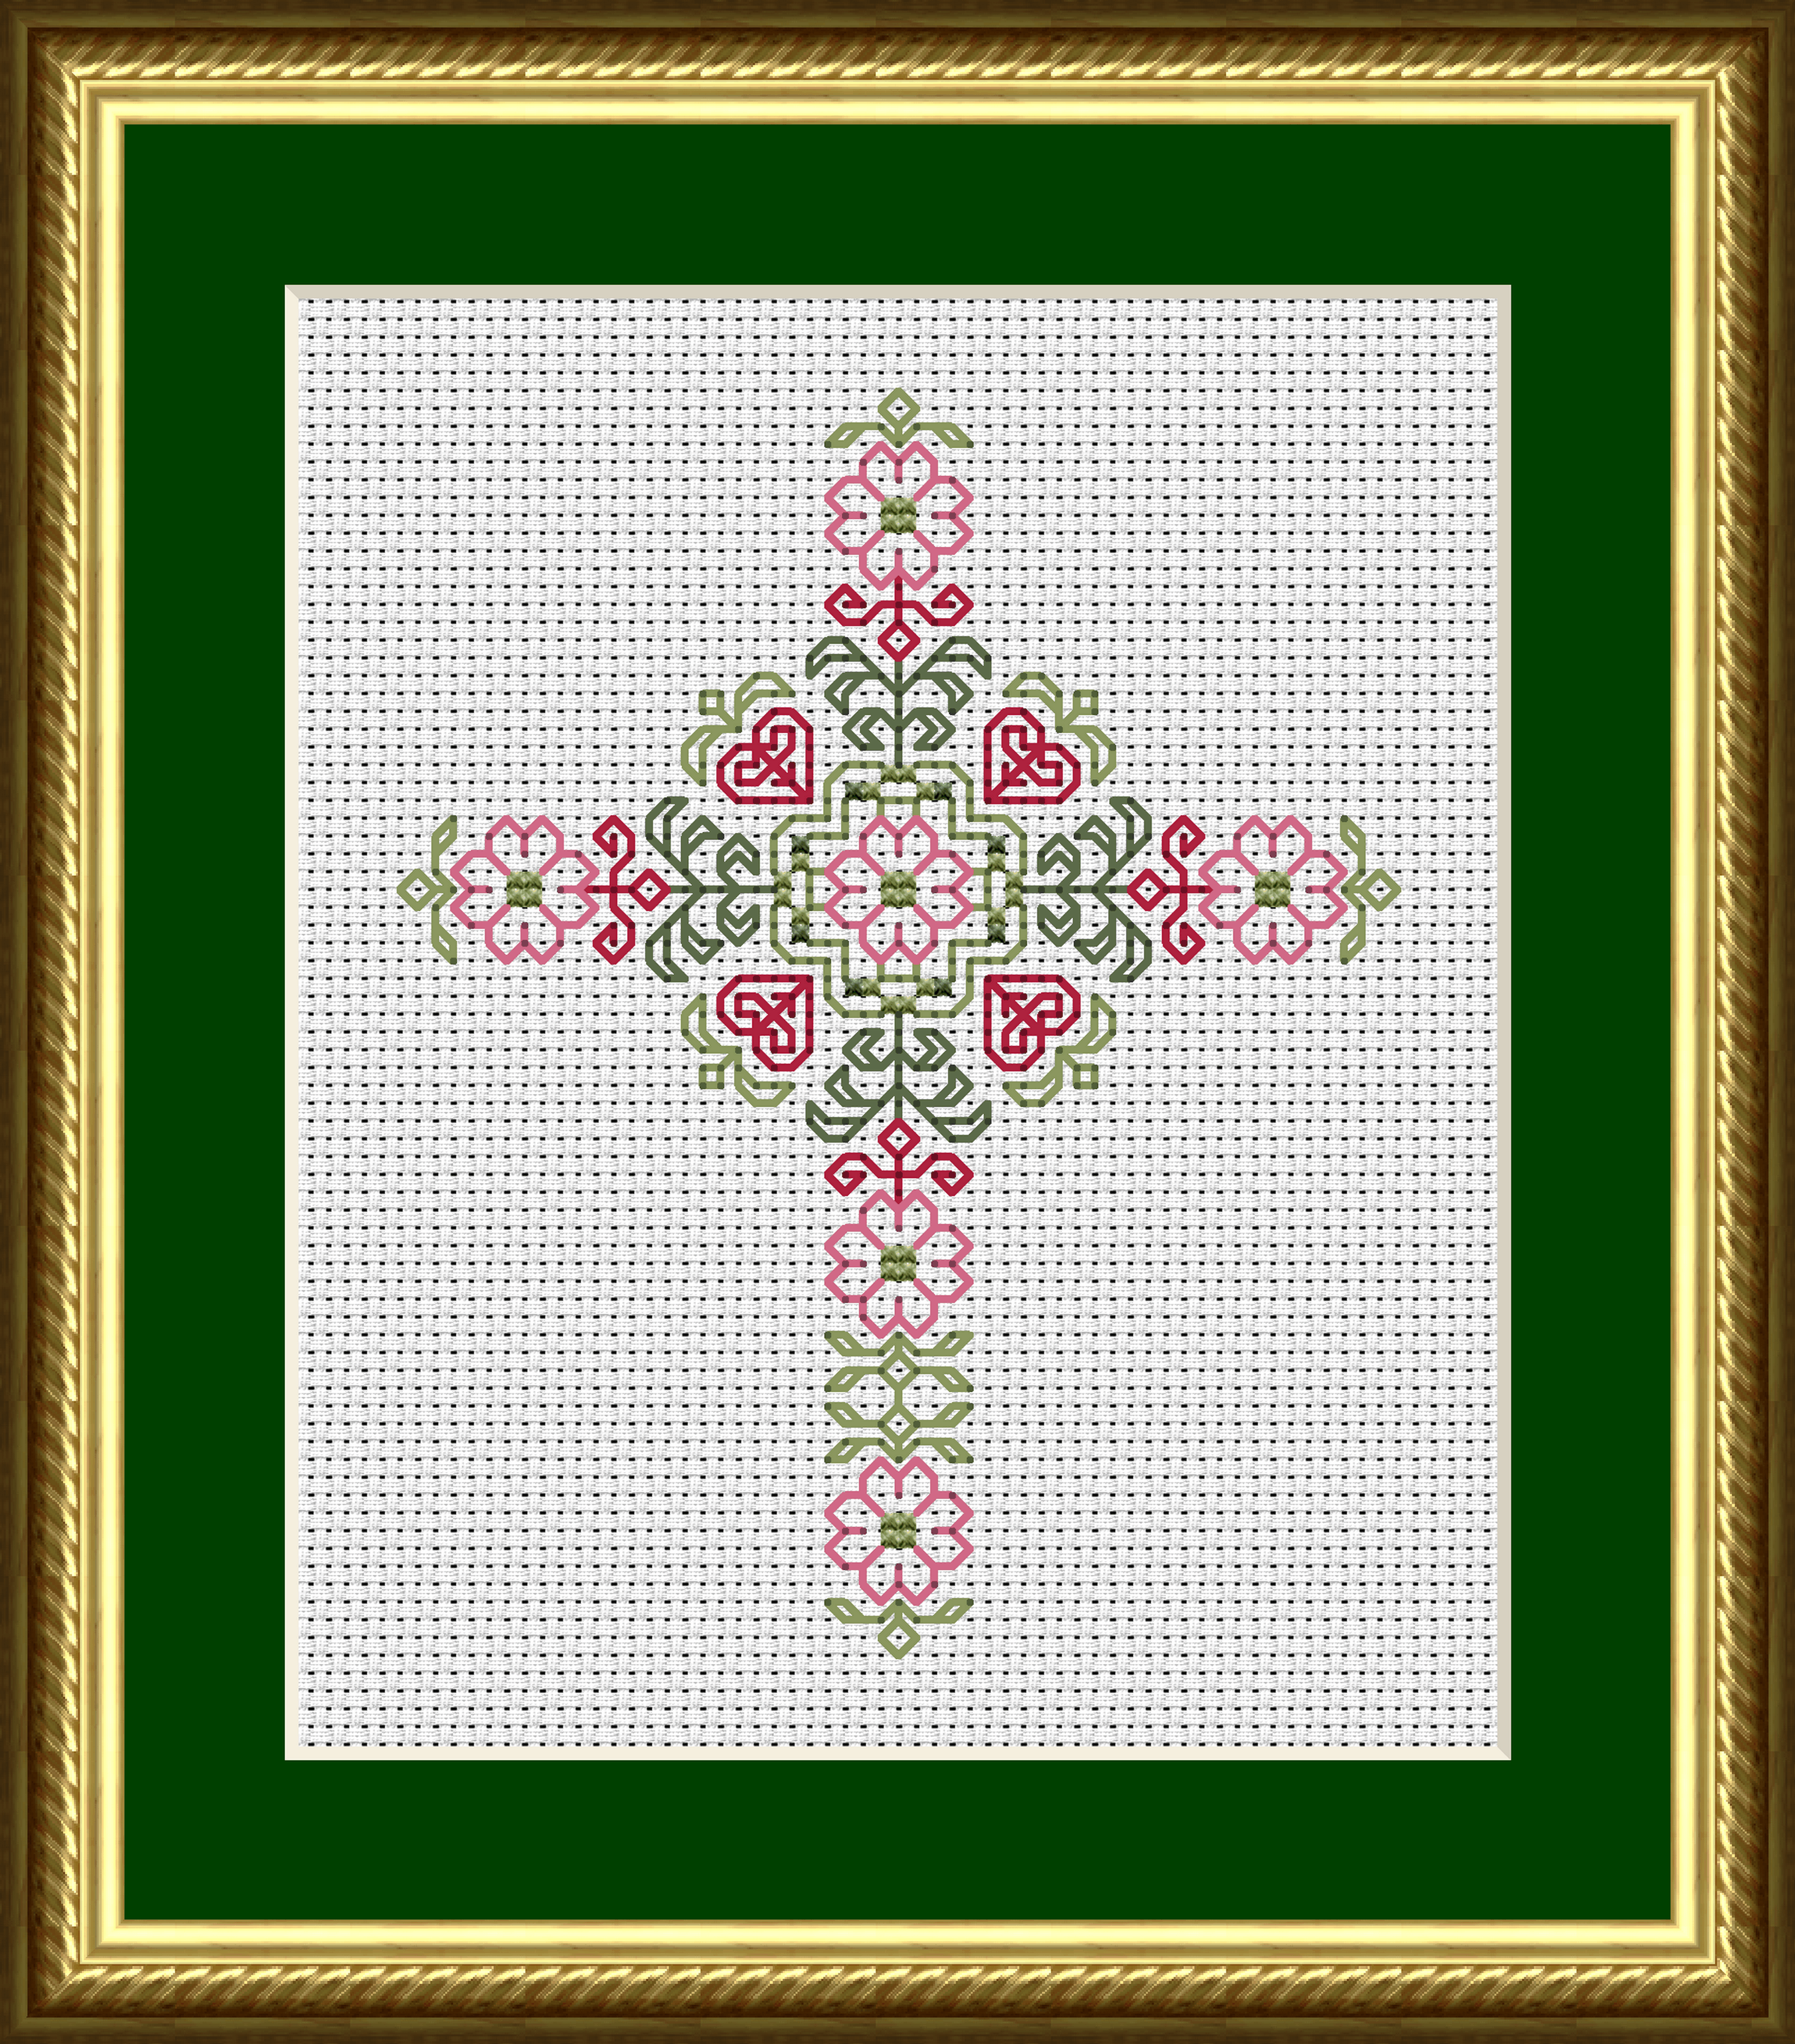 Dogwood Flowers and Hearts Cross Cross Stitch Pattern 4800